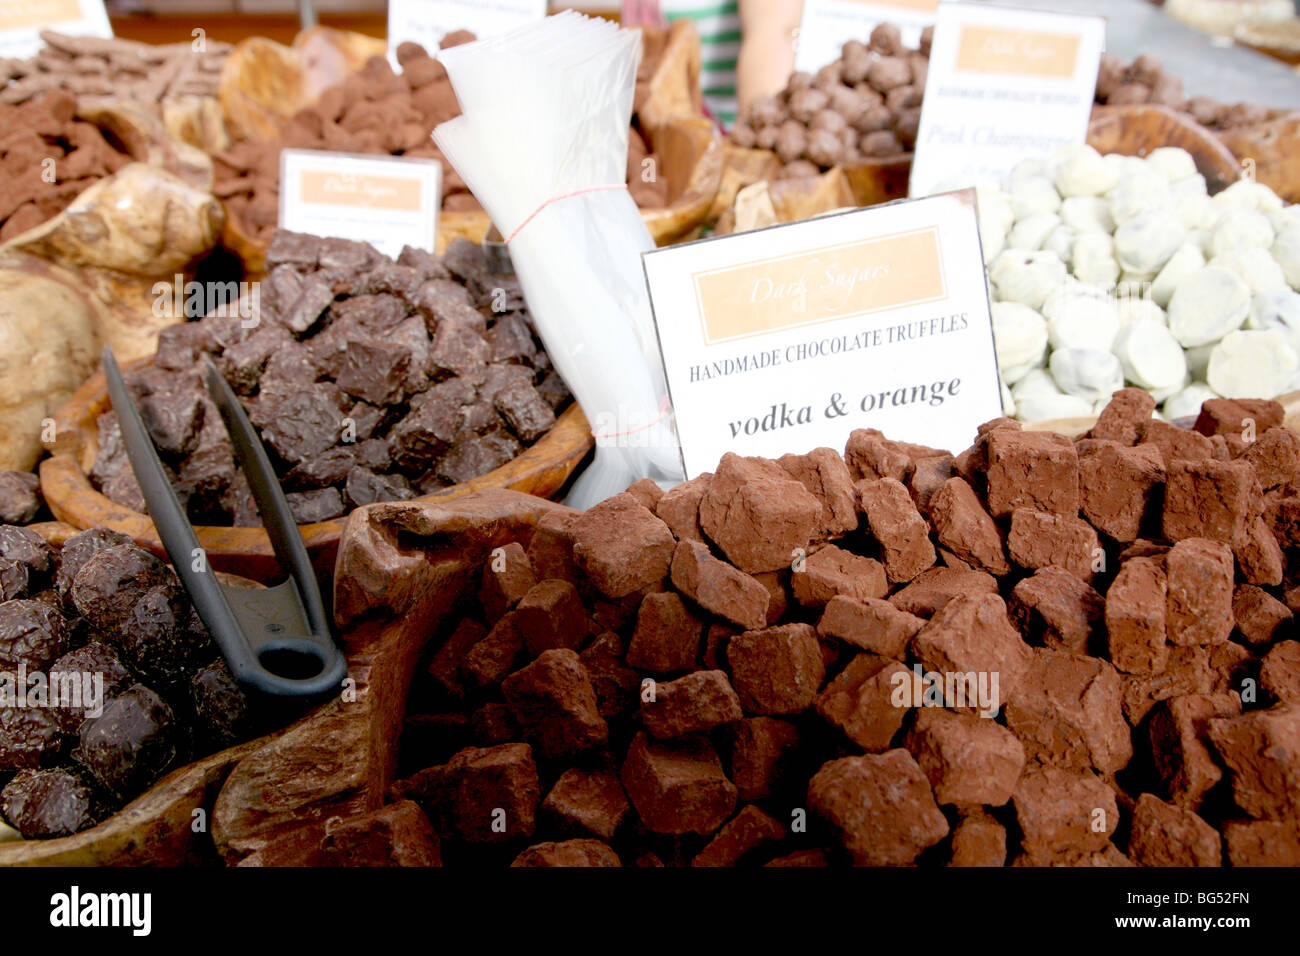 Chocolate truffles in Jubilee market in Borough, London Stock Photo